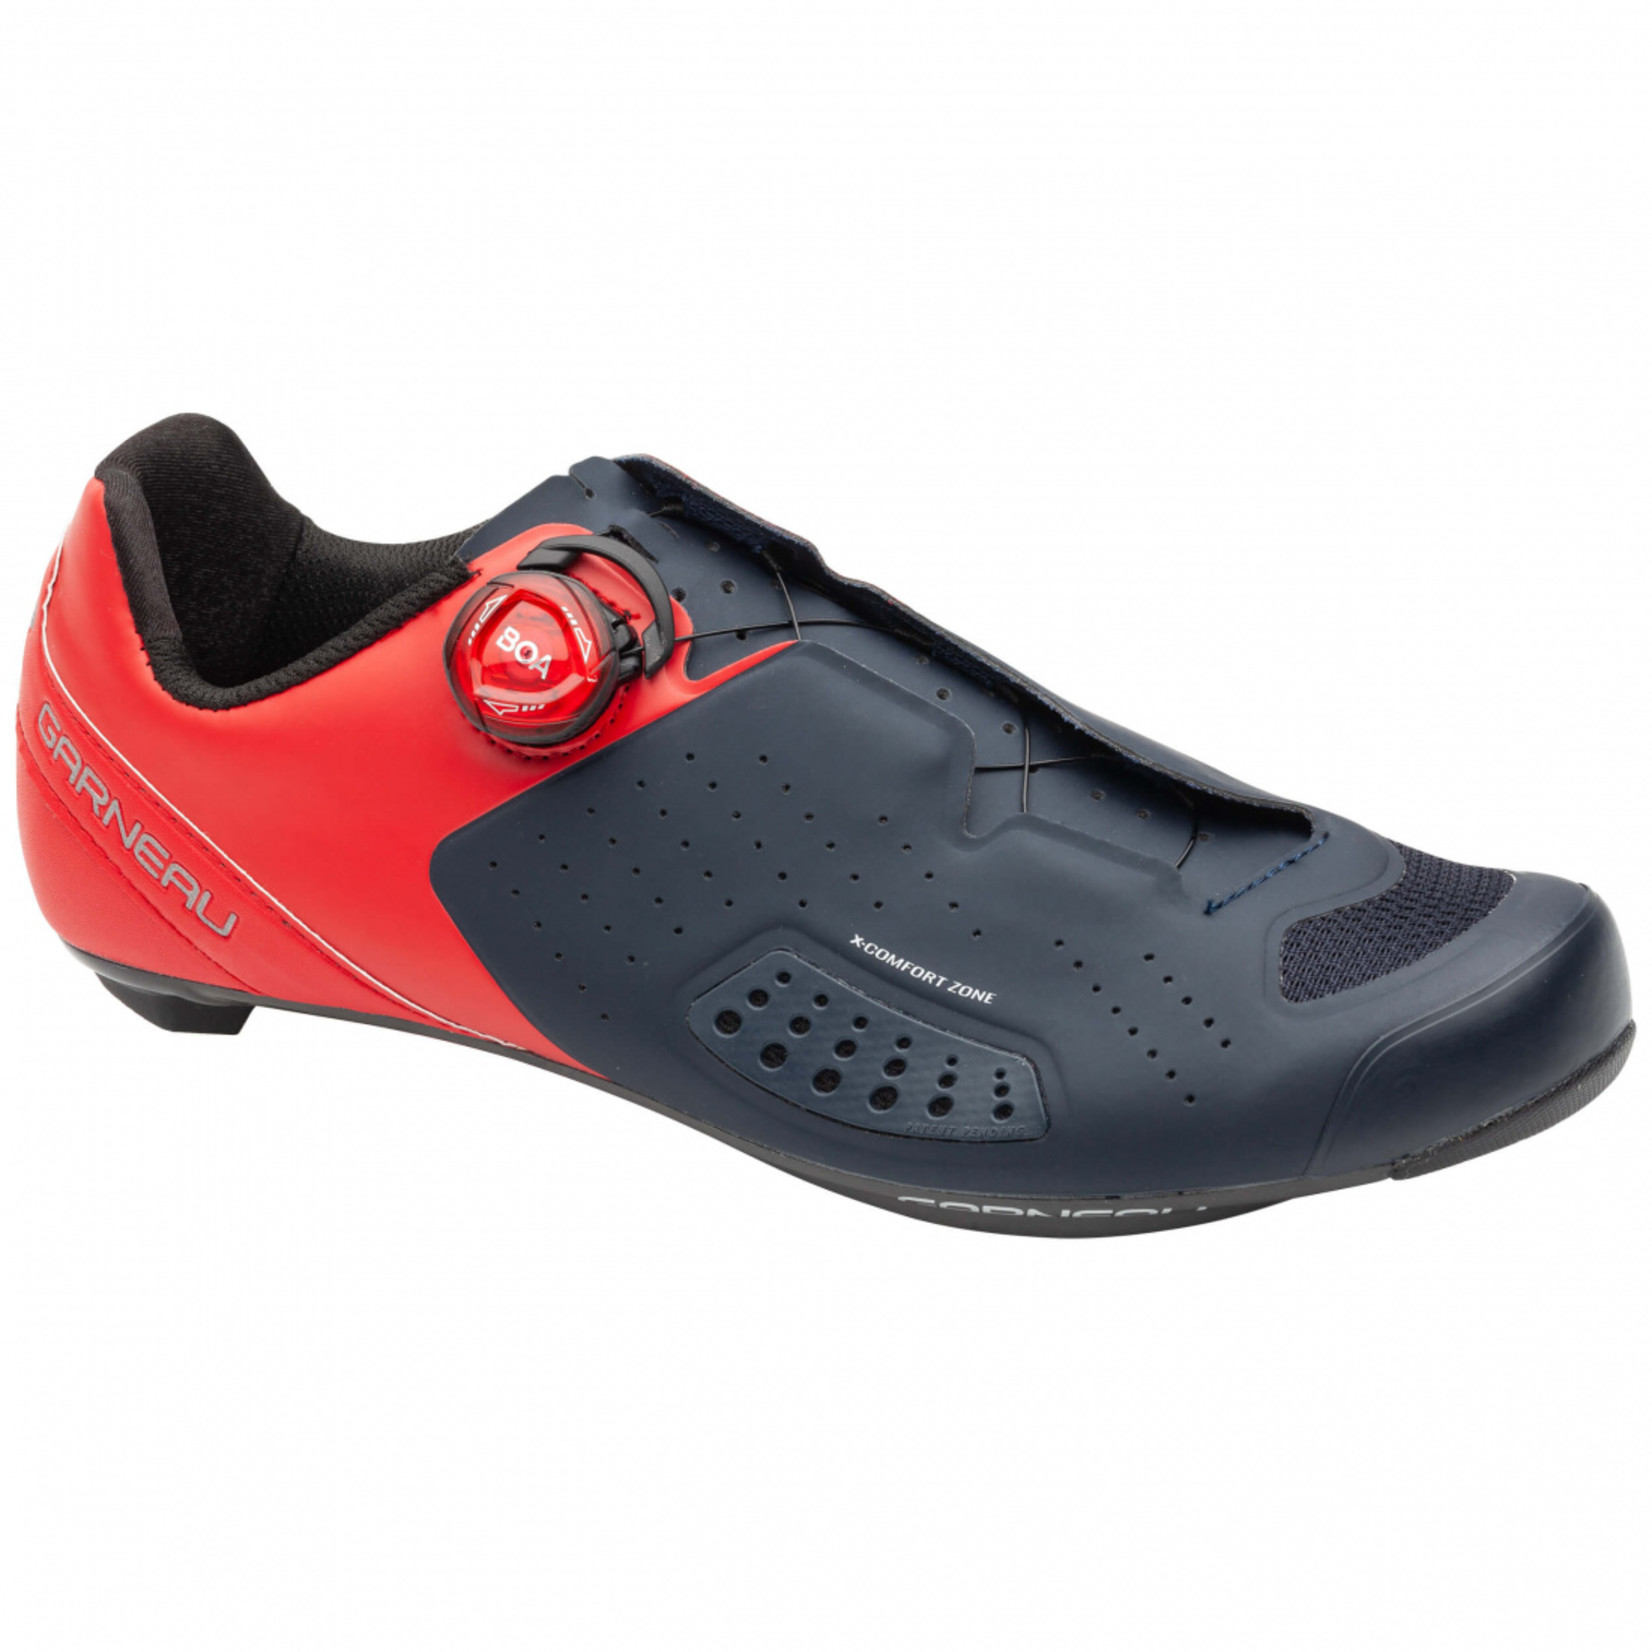 Garneau Carbon LS-100 III Cycling shoes